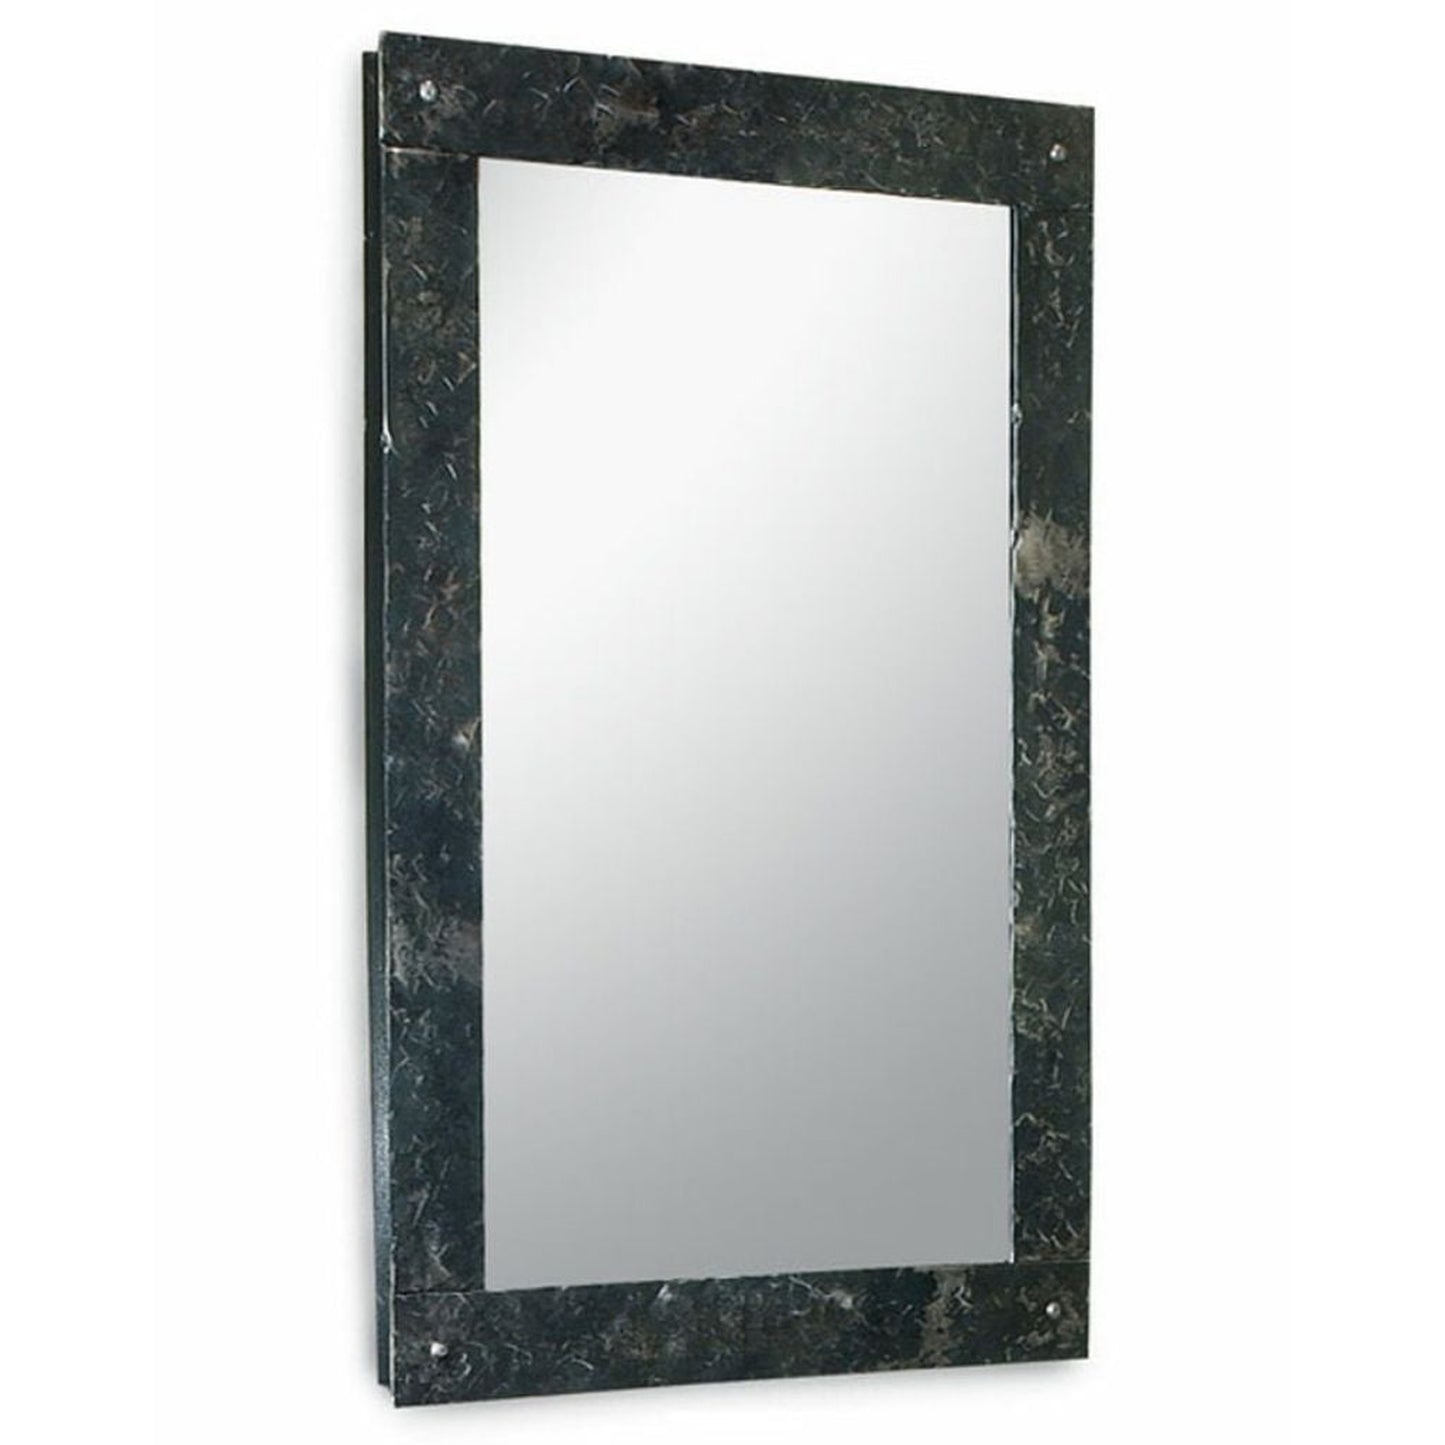 Stone County Ironworks Studio Series 29" x 41" Satin Black Finish Rectangular Mirror